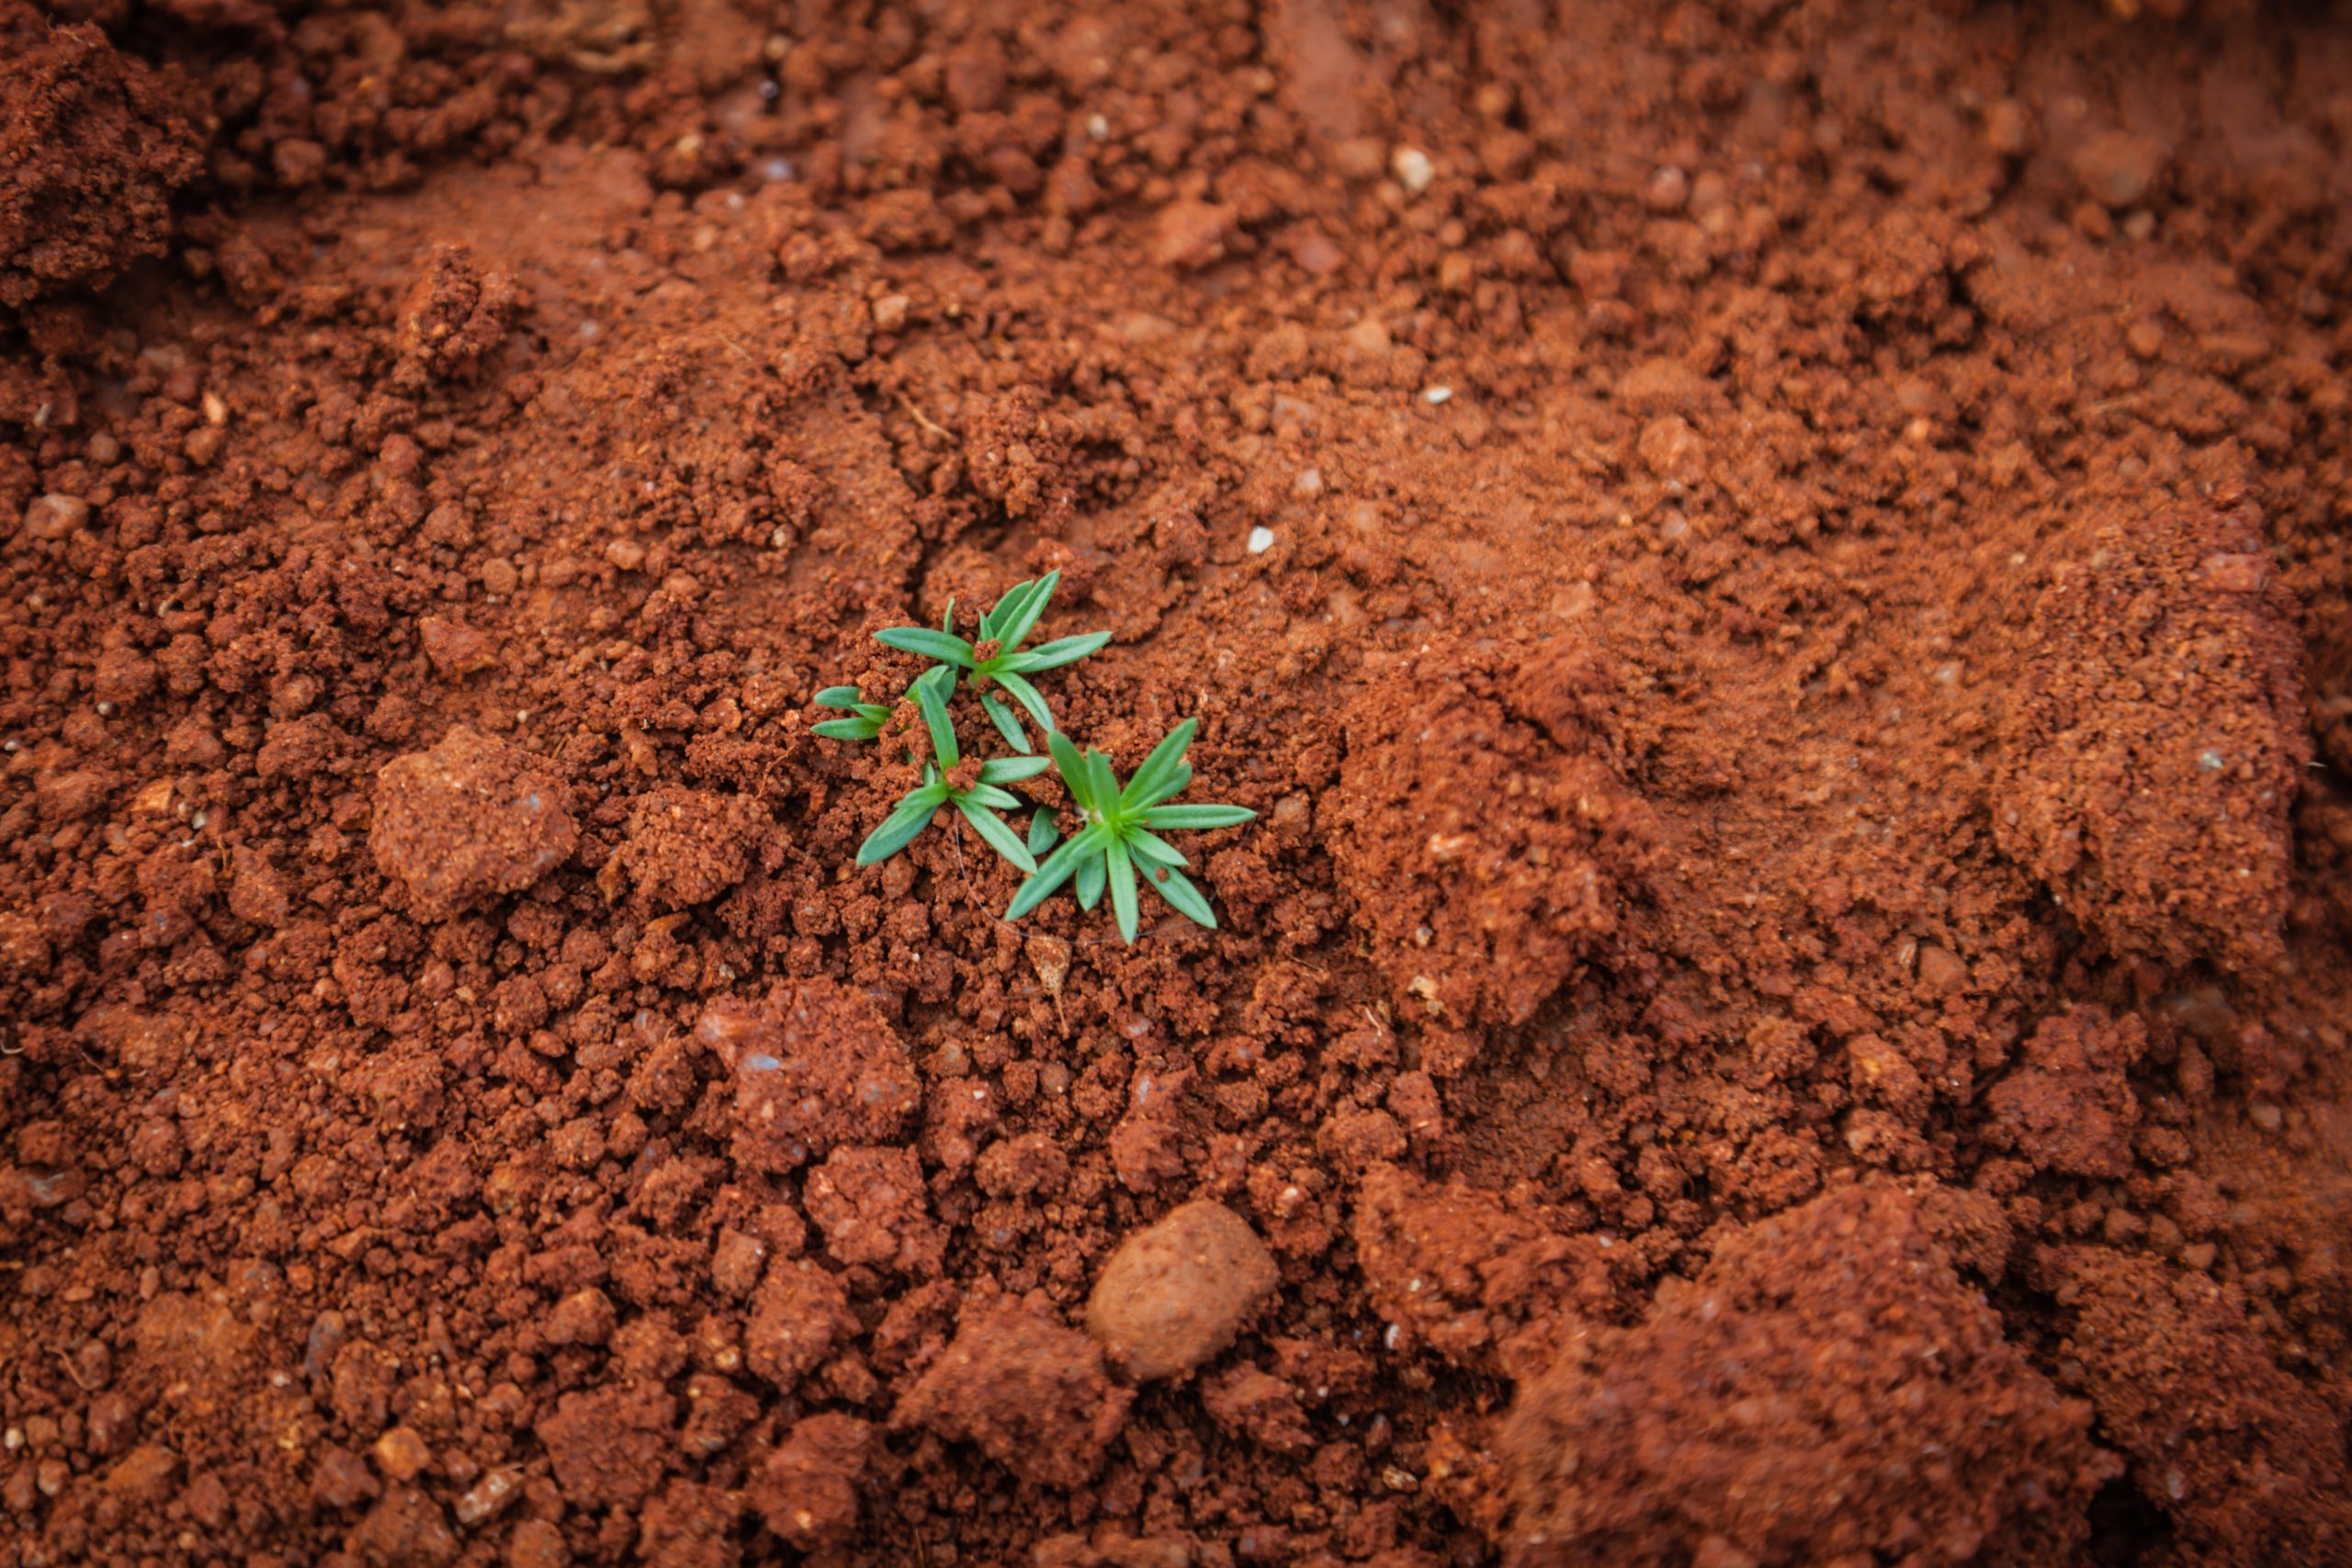 A seedling growing in reddish dirt